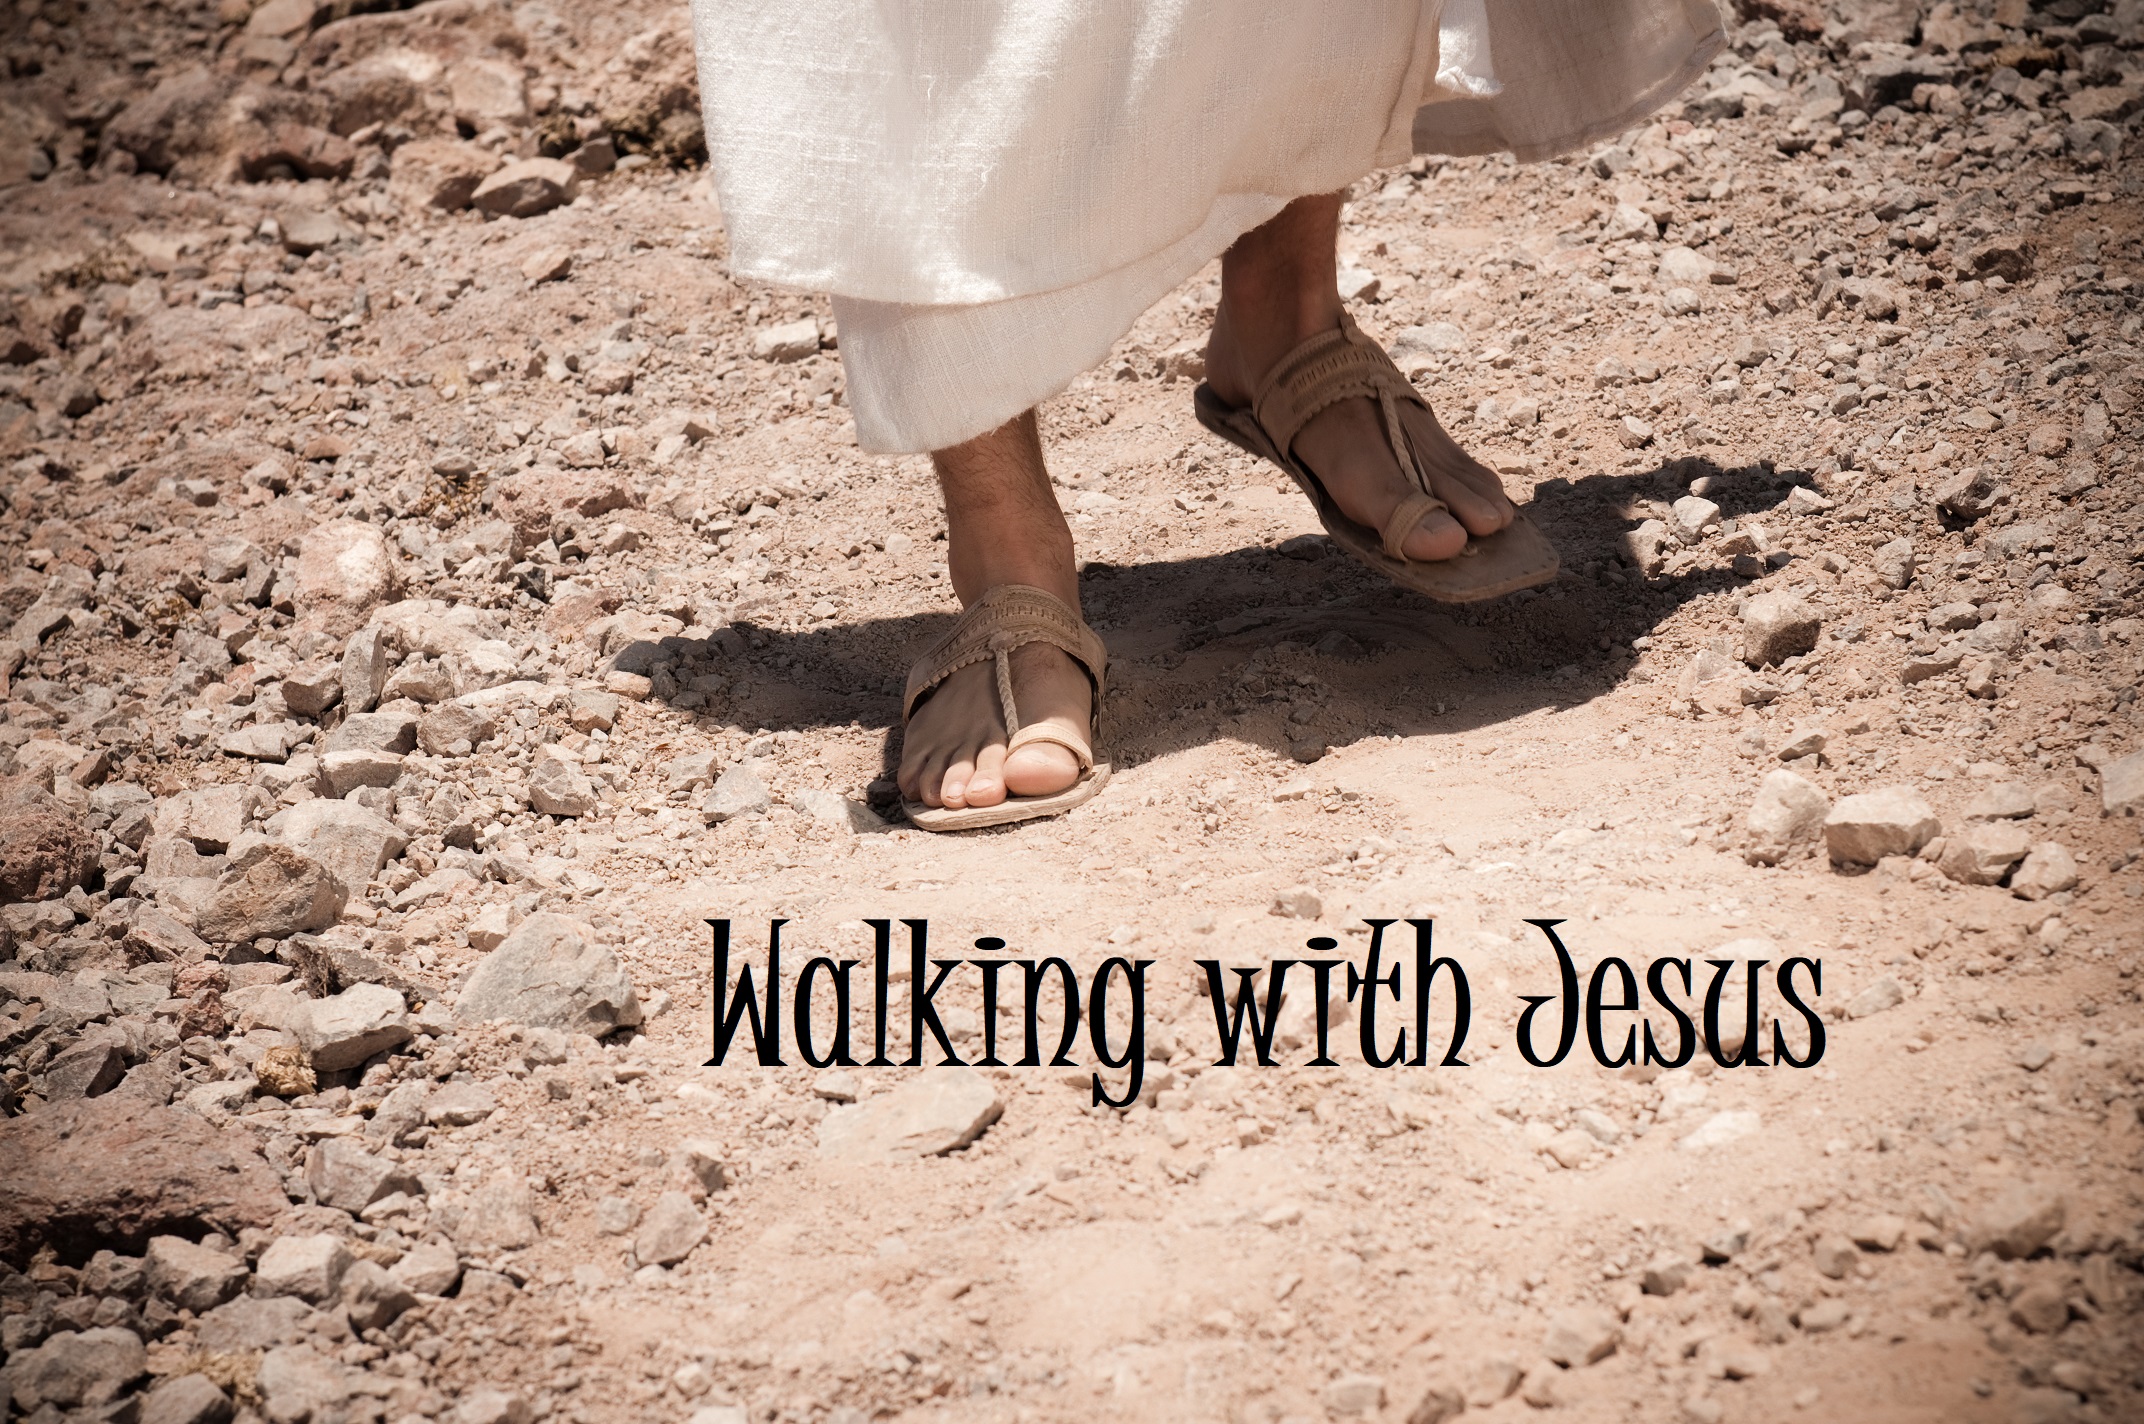 Пошла по стопам отца. Ноги Иисуса Христа в сандалиях. Иисус в сандалях. Идти по стопам. Ноги Иисуса в сандалях.